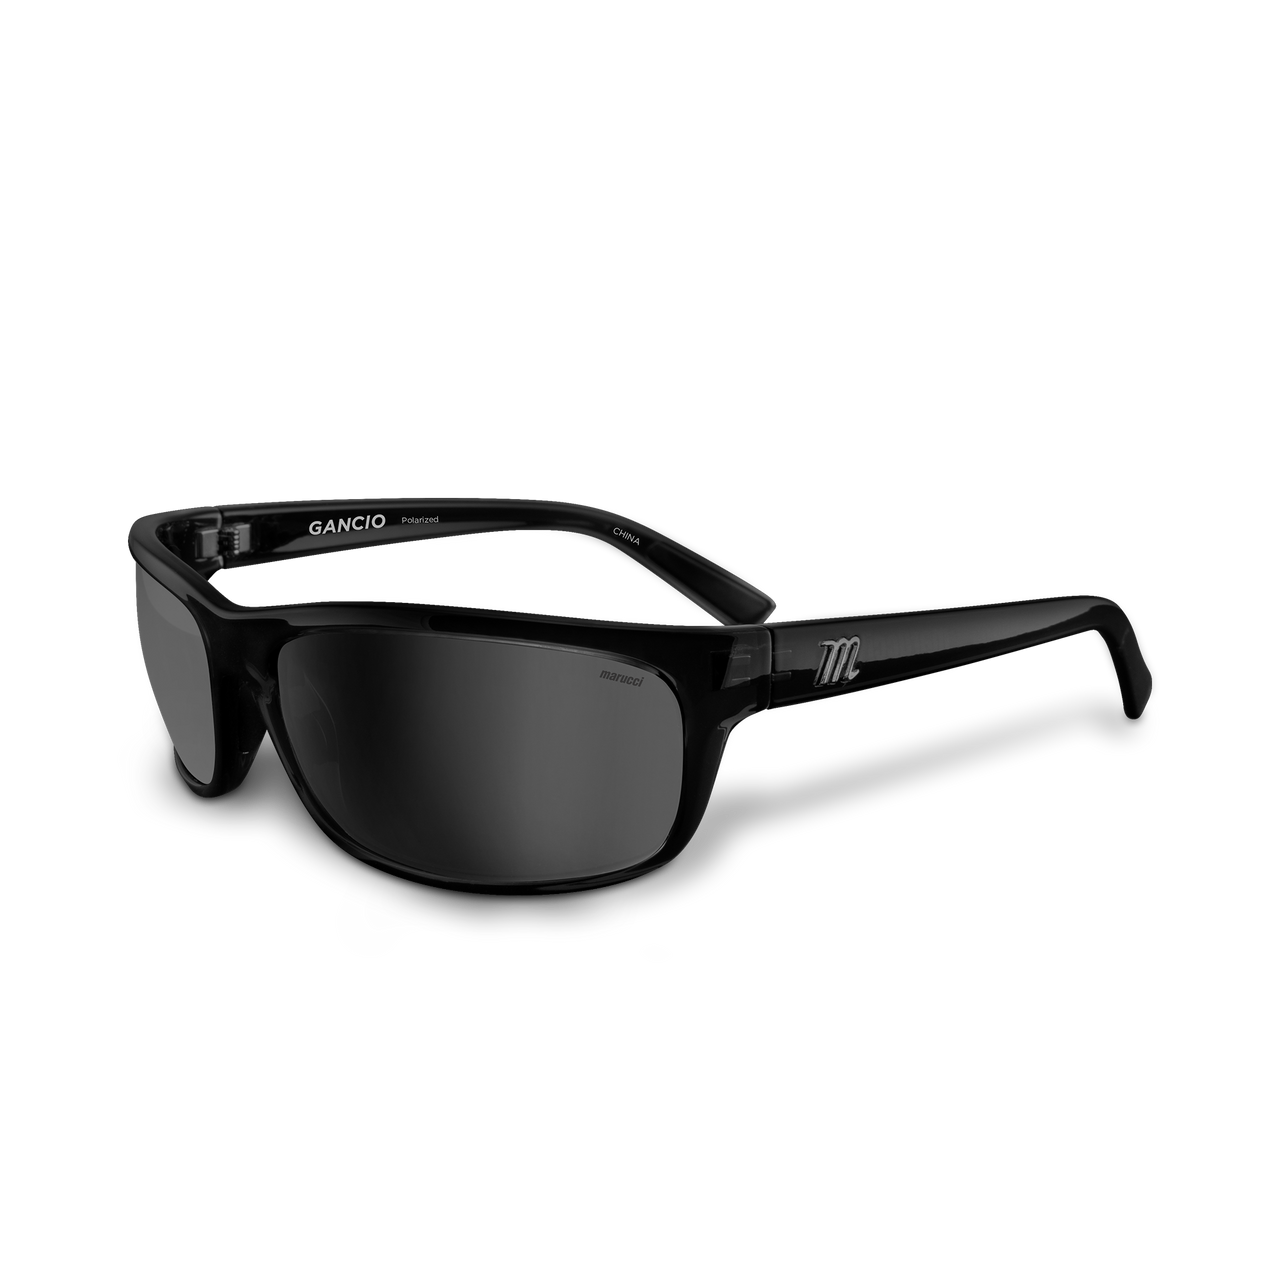 Marucci Gancio Lifestyle Sunglasses - Translucent Black Translucent - Rose Lens With Gold Mirror - Polar 